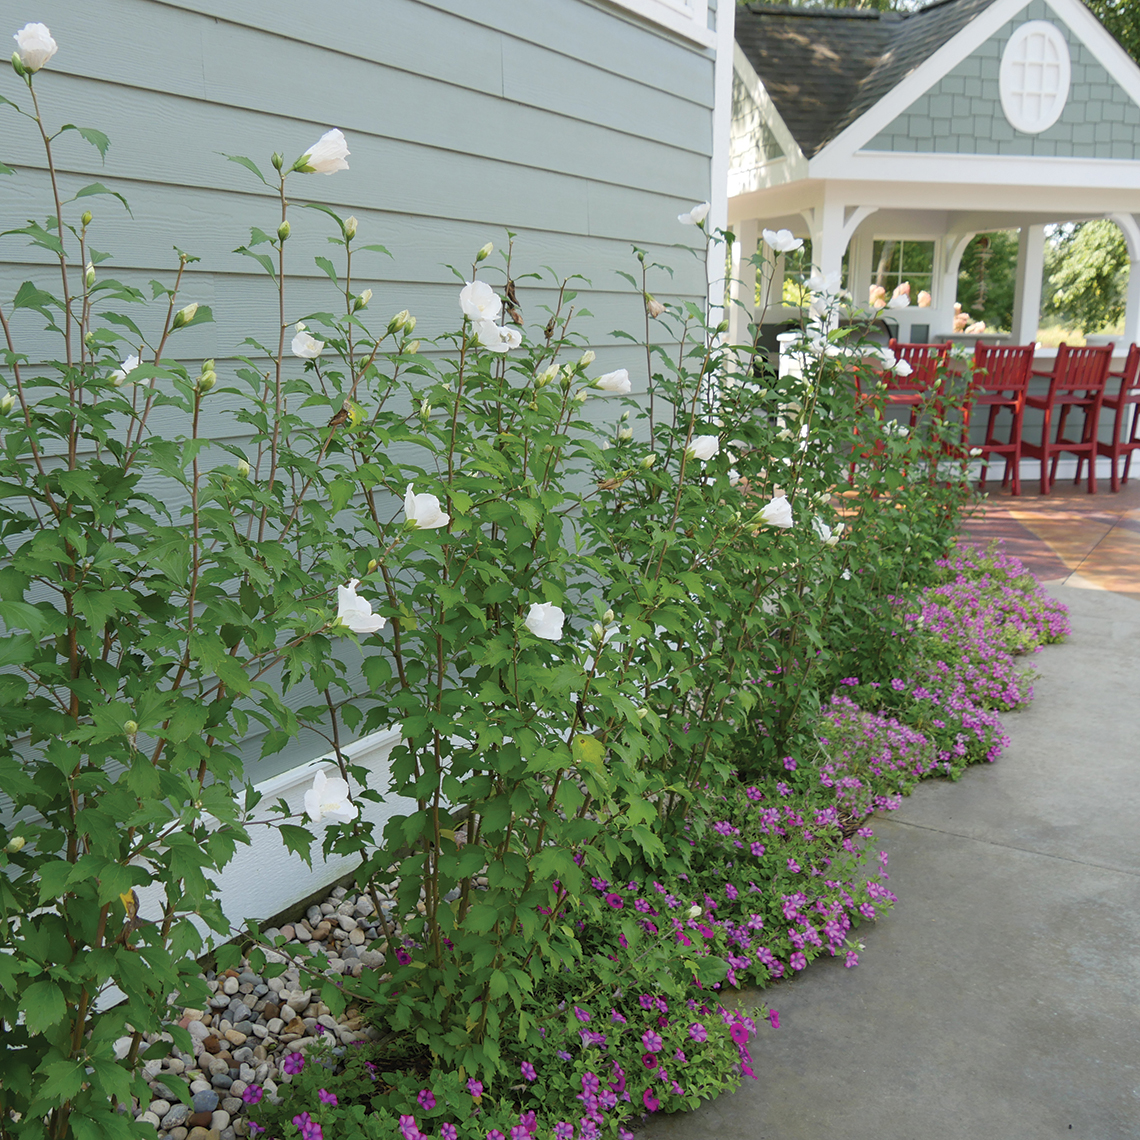 Five White Pillar rose of Sharon growing along a patio showing their narrow columnar habit